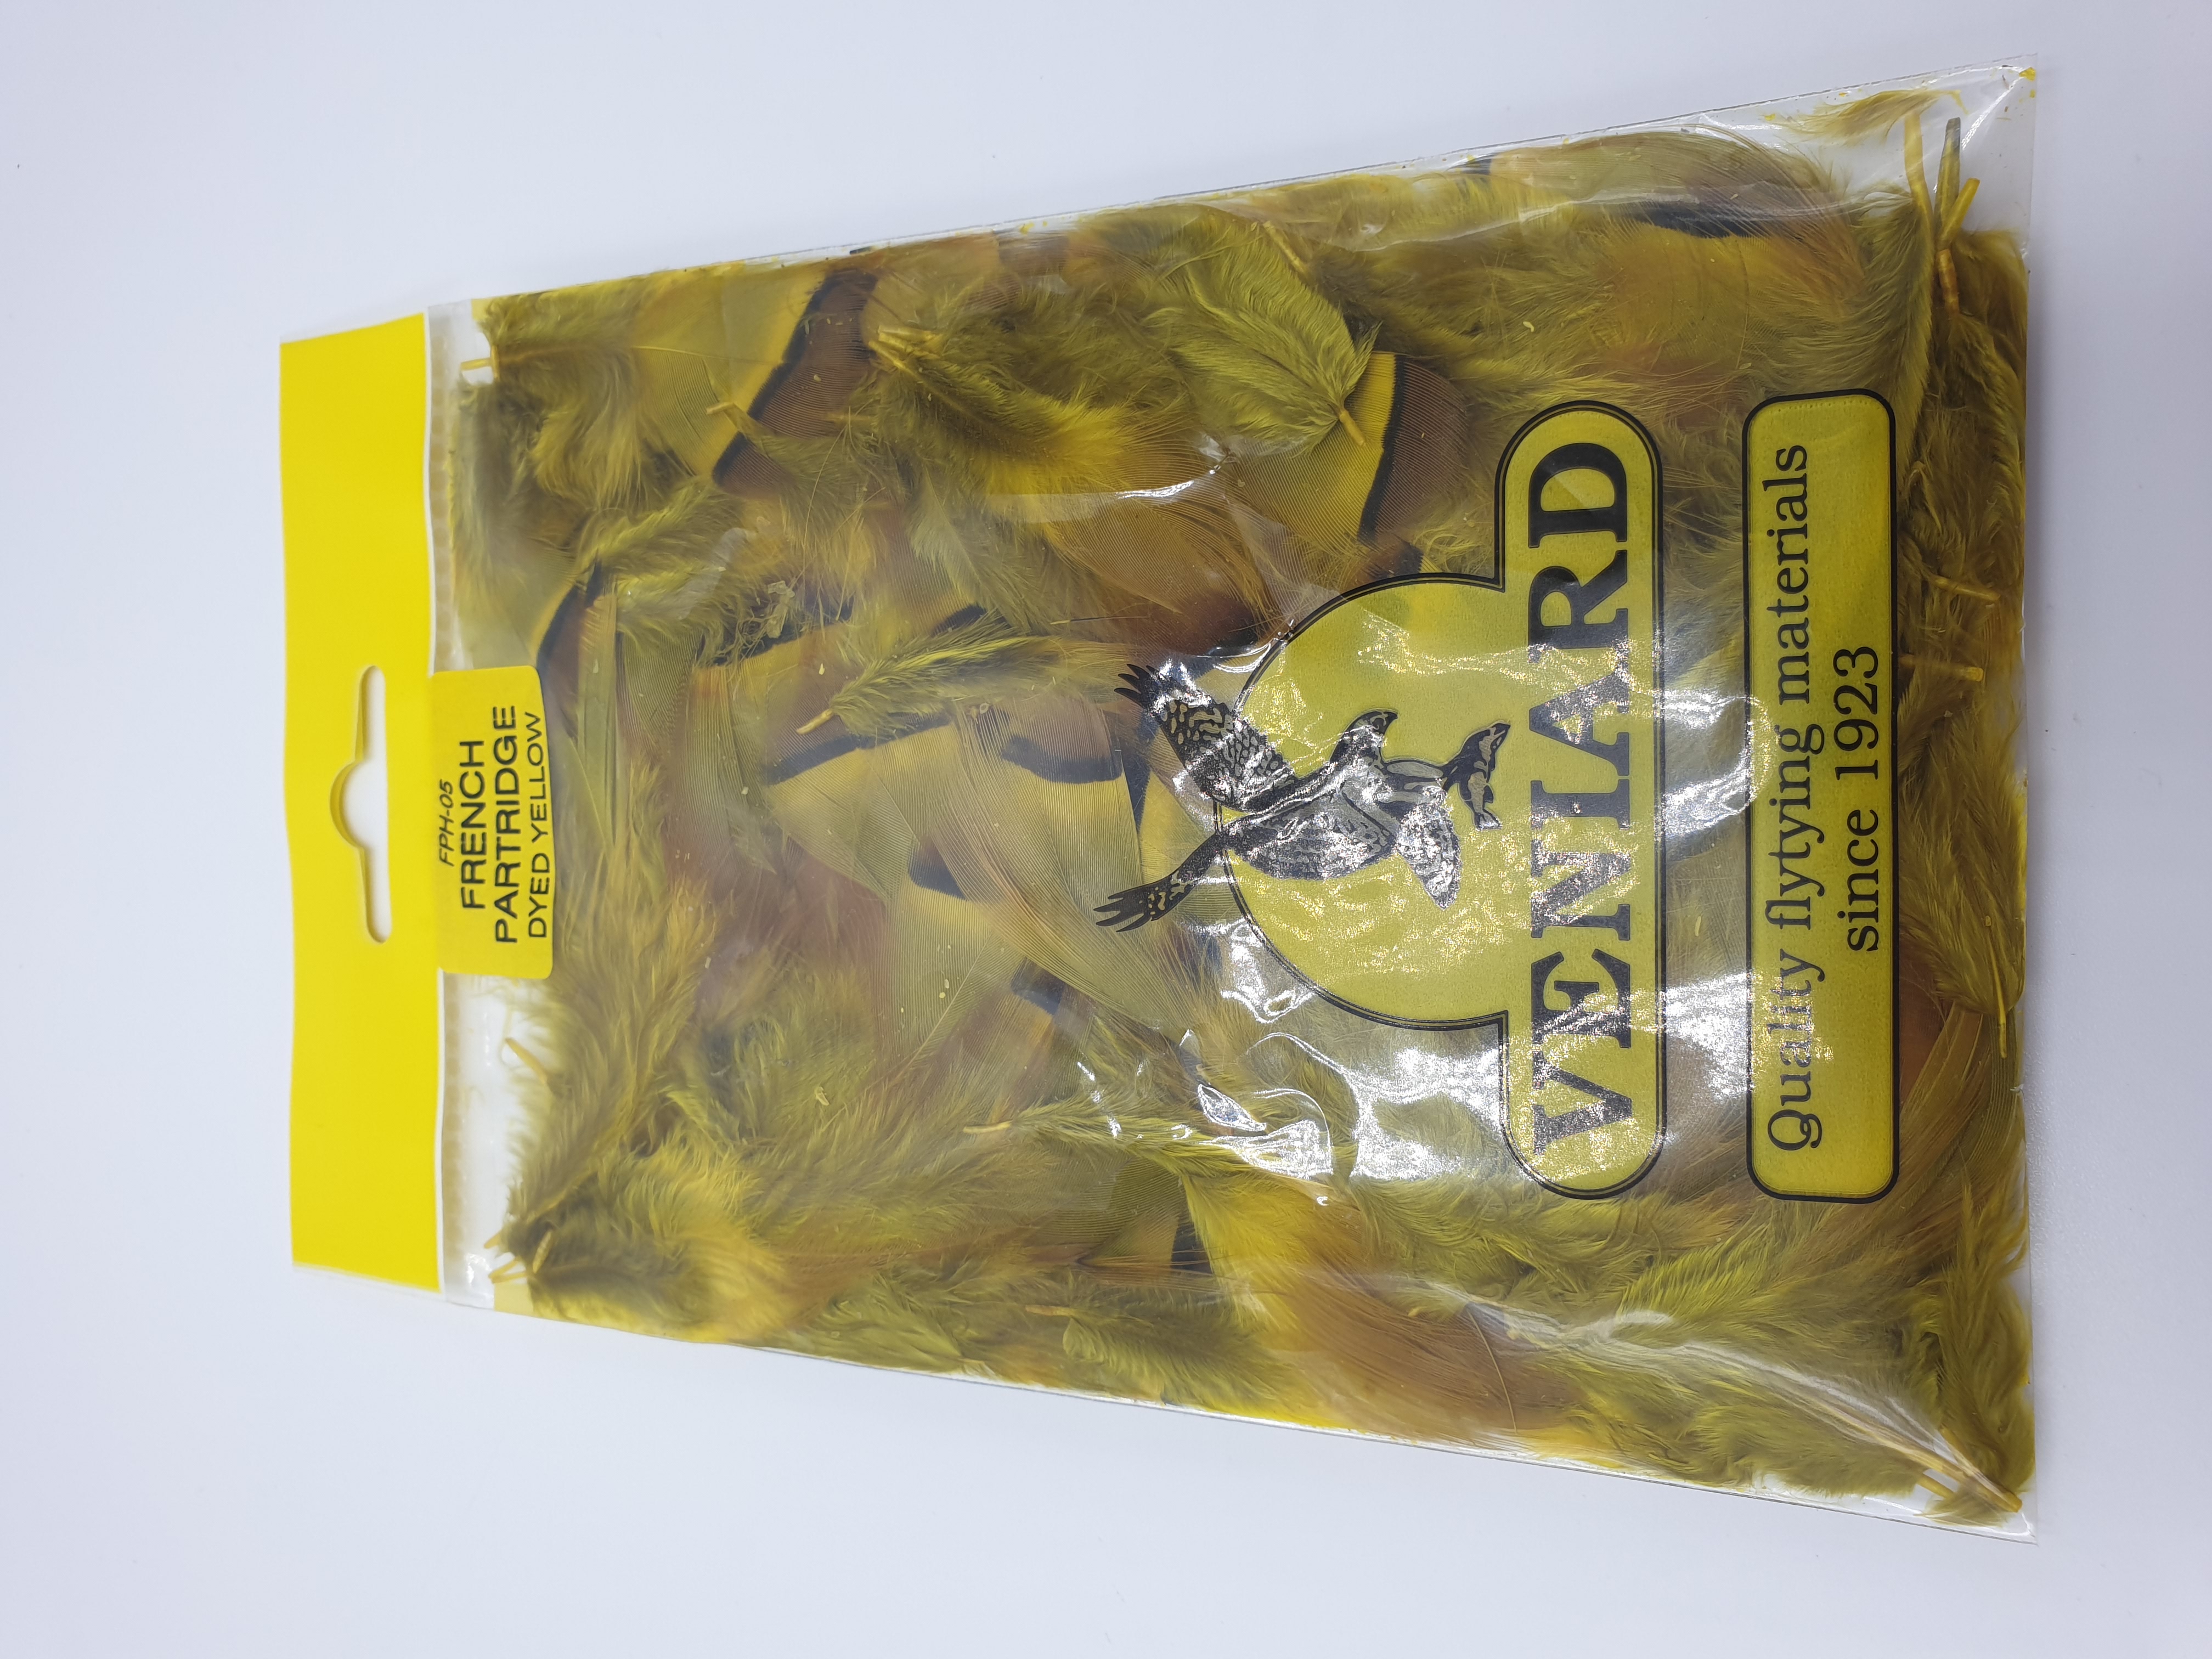 Veniard French Partridge Mixed Dyed Yellow 2 Gram